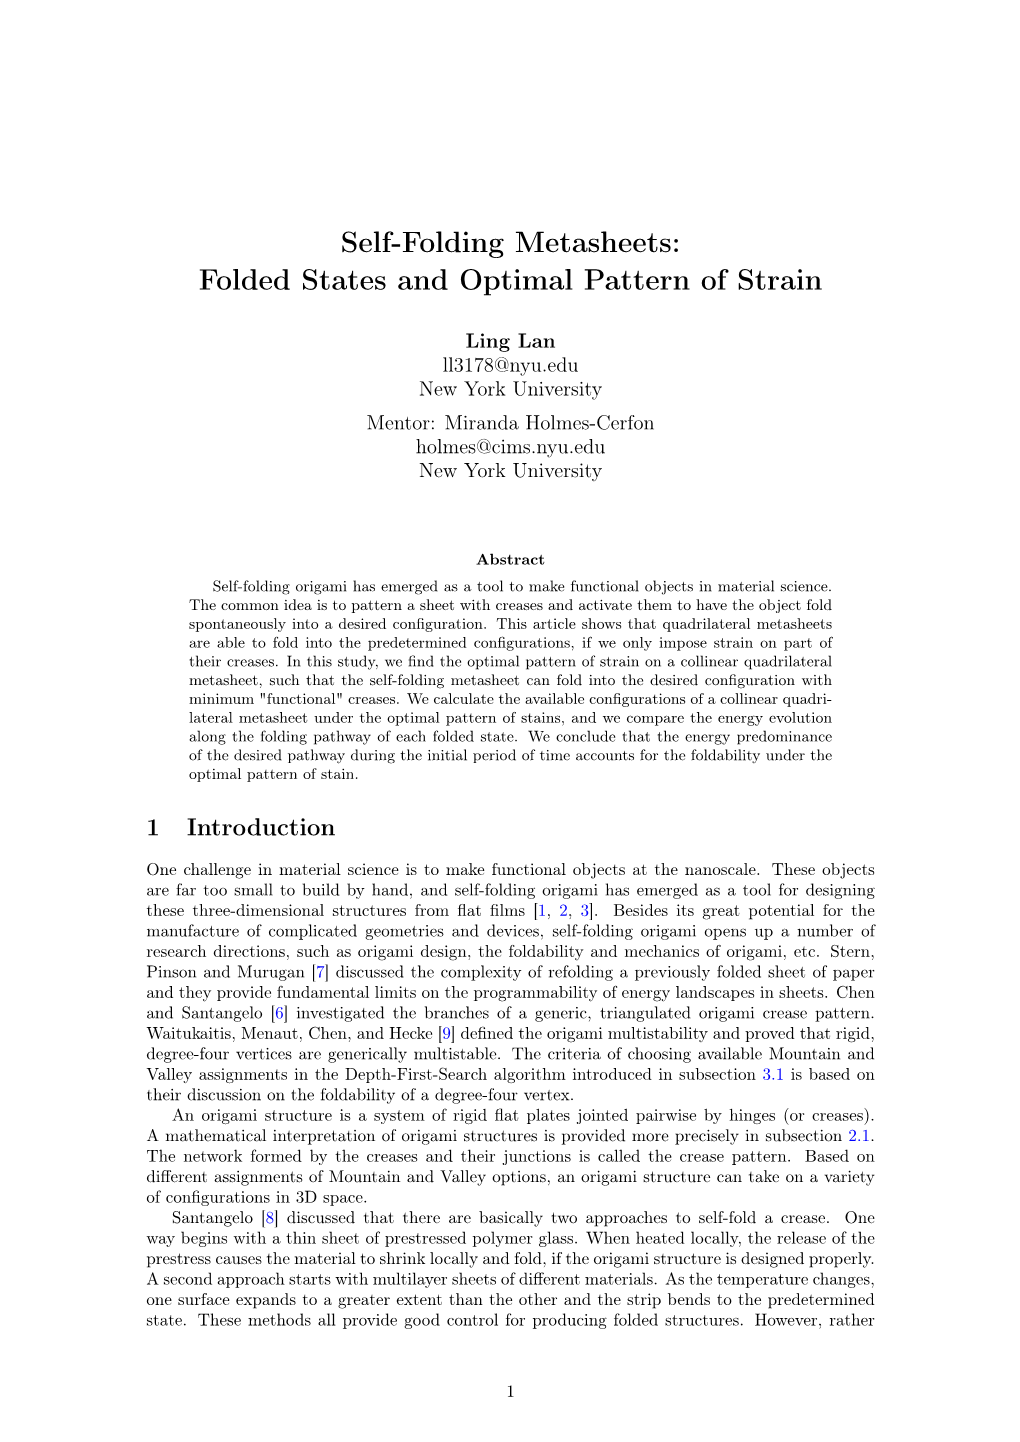 Self-Folding Metasheets: Folded States and Optimal Pattern of Strain